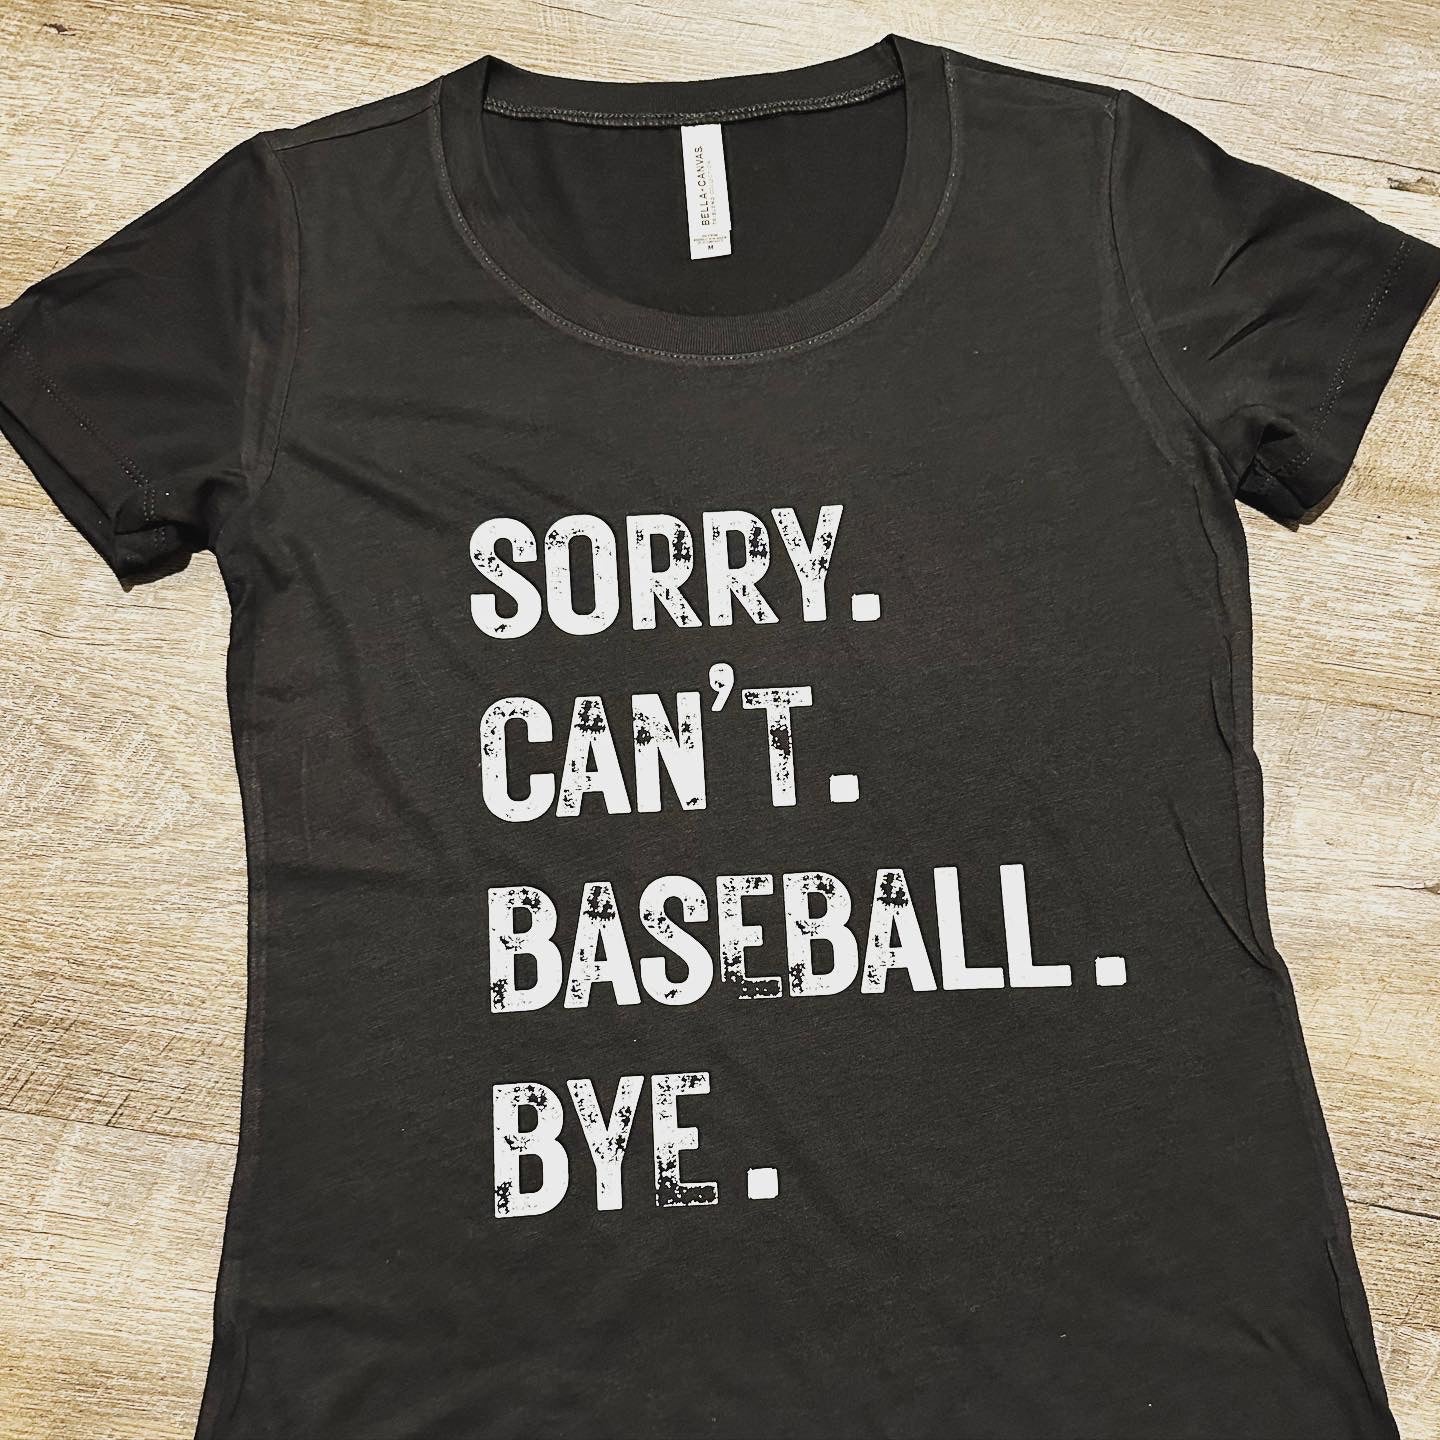 Sorry. Can’t. Baseball. T-shirt